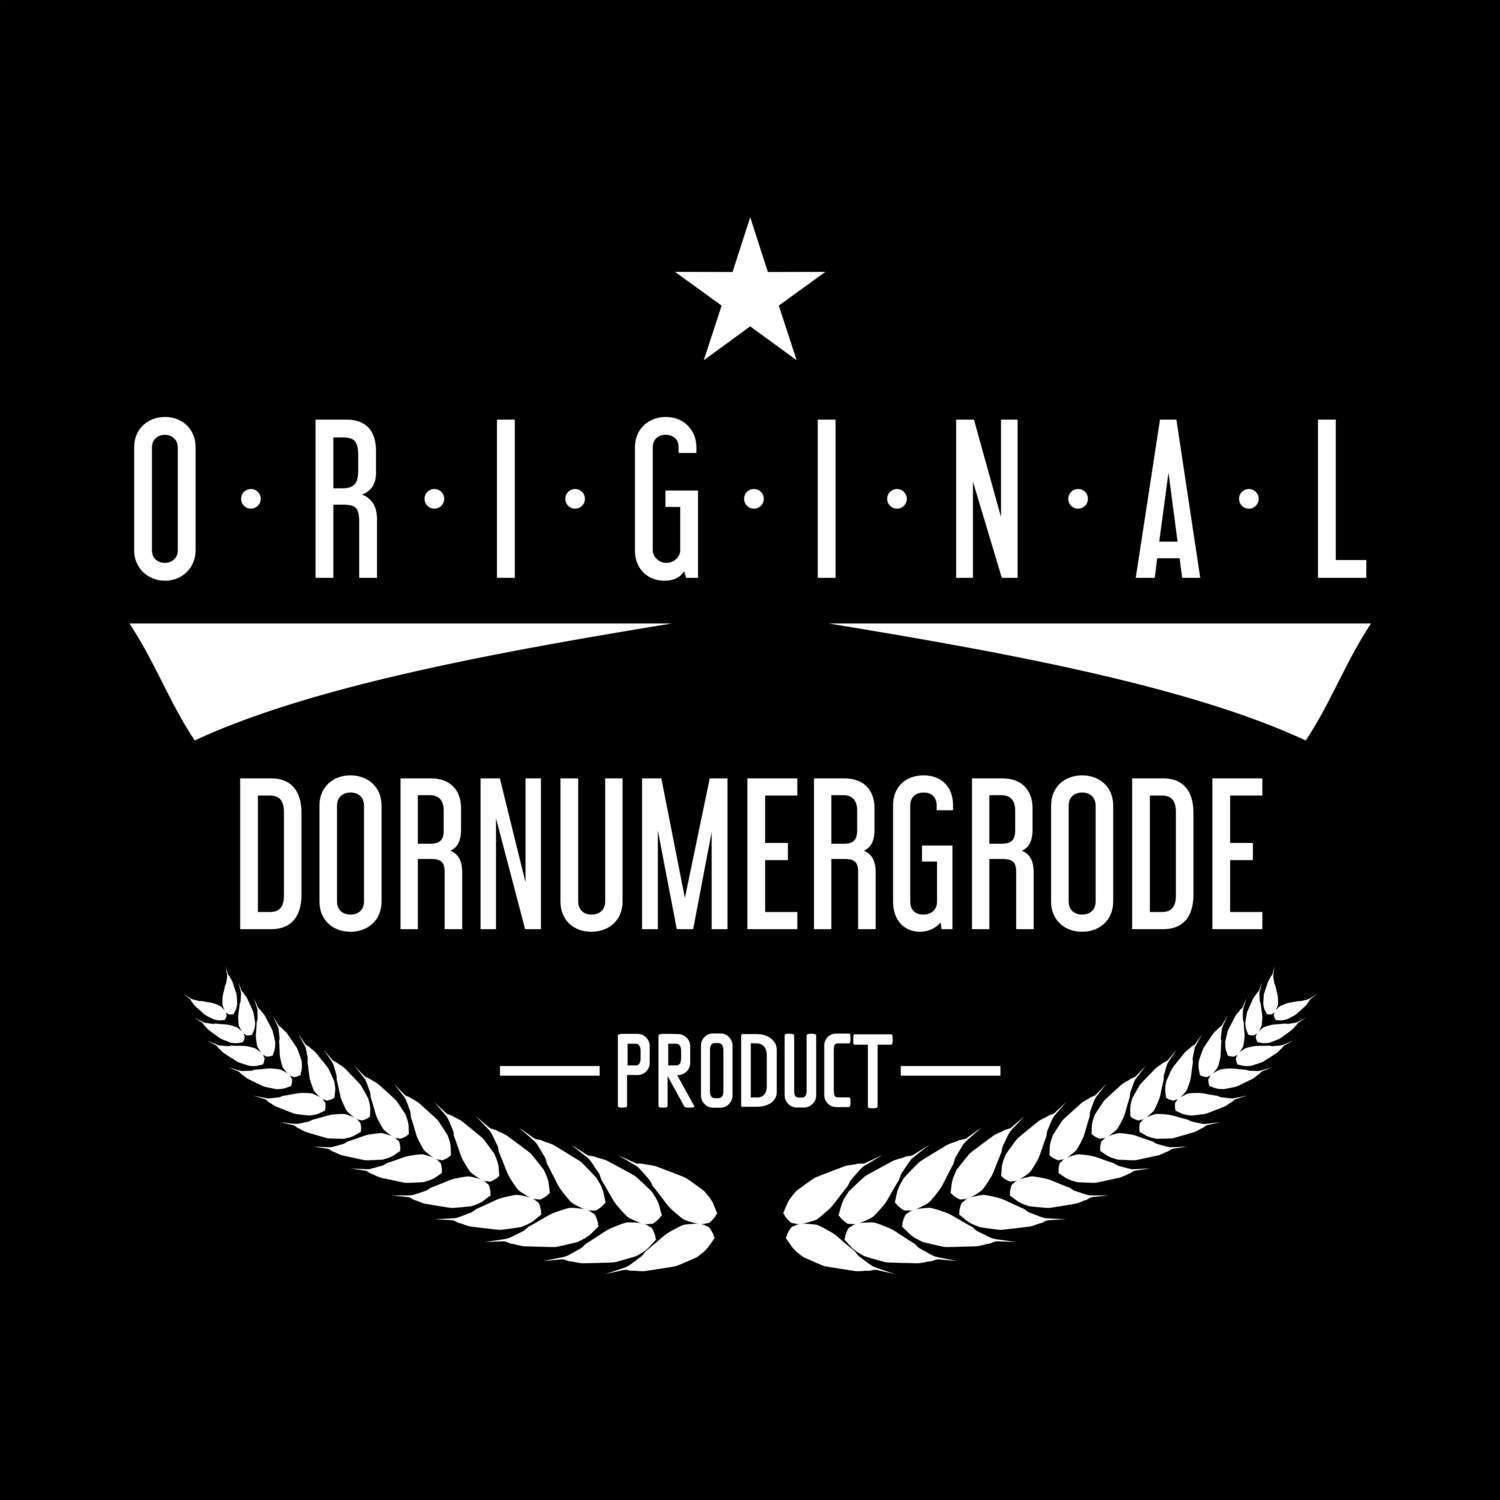 Dornumergrode T-Shirt »Original Product«